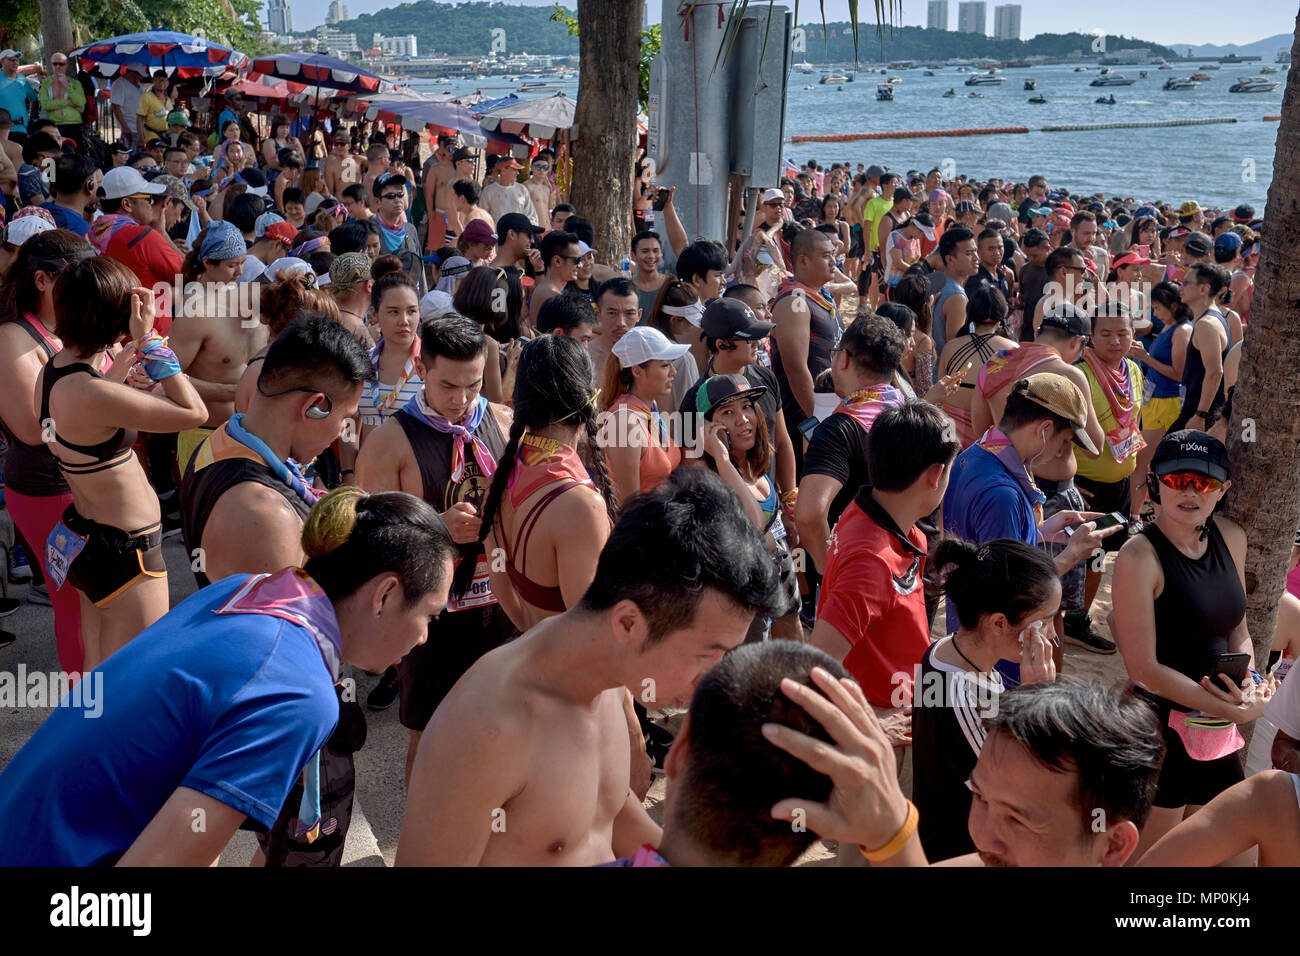 Large crowd lining the beach awaiting the start of a fun run, Pattaya, Thailand, 2018 Stock Photo